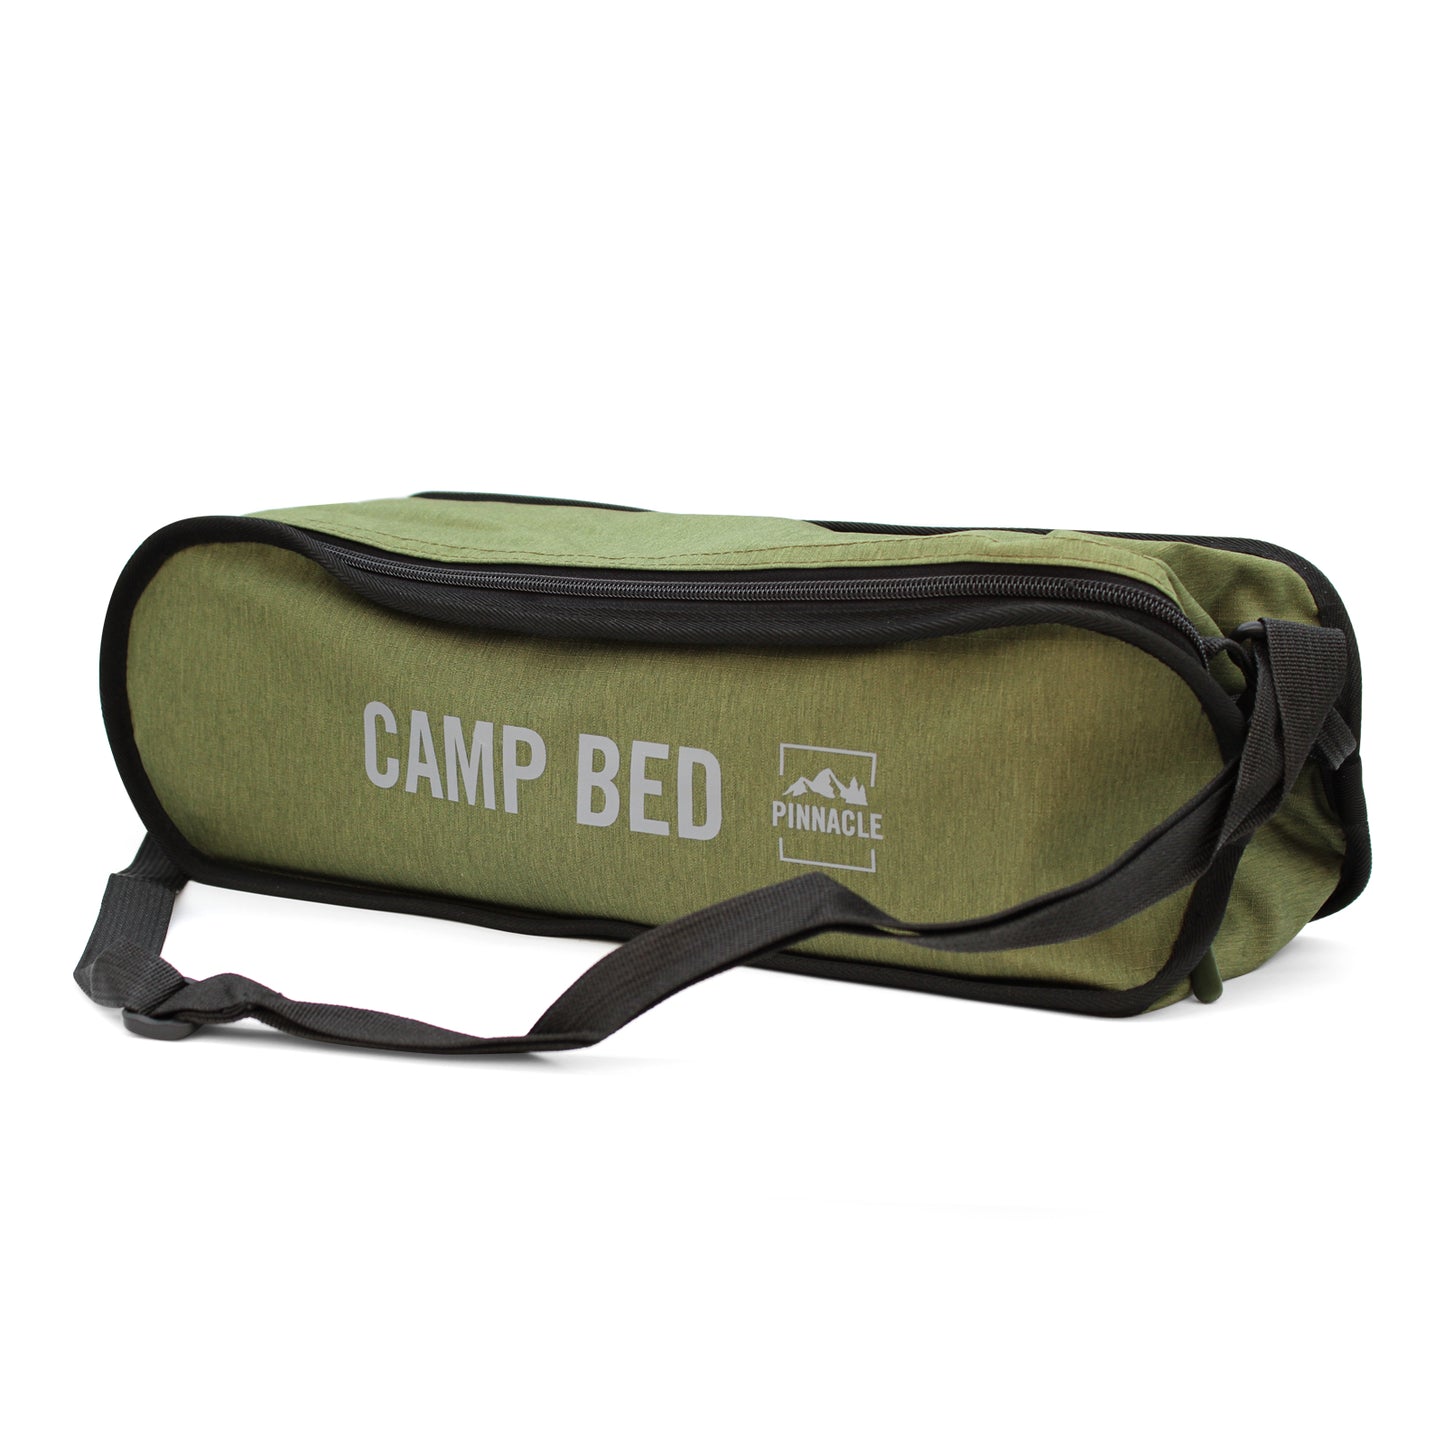 Lightweight Packaway Camp Bed in Travel Bag